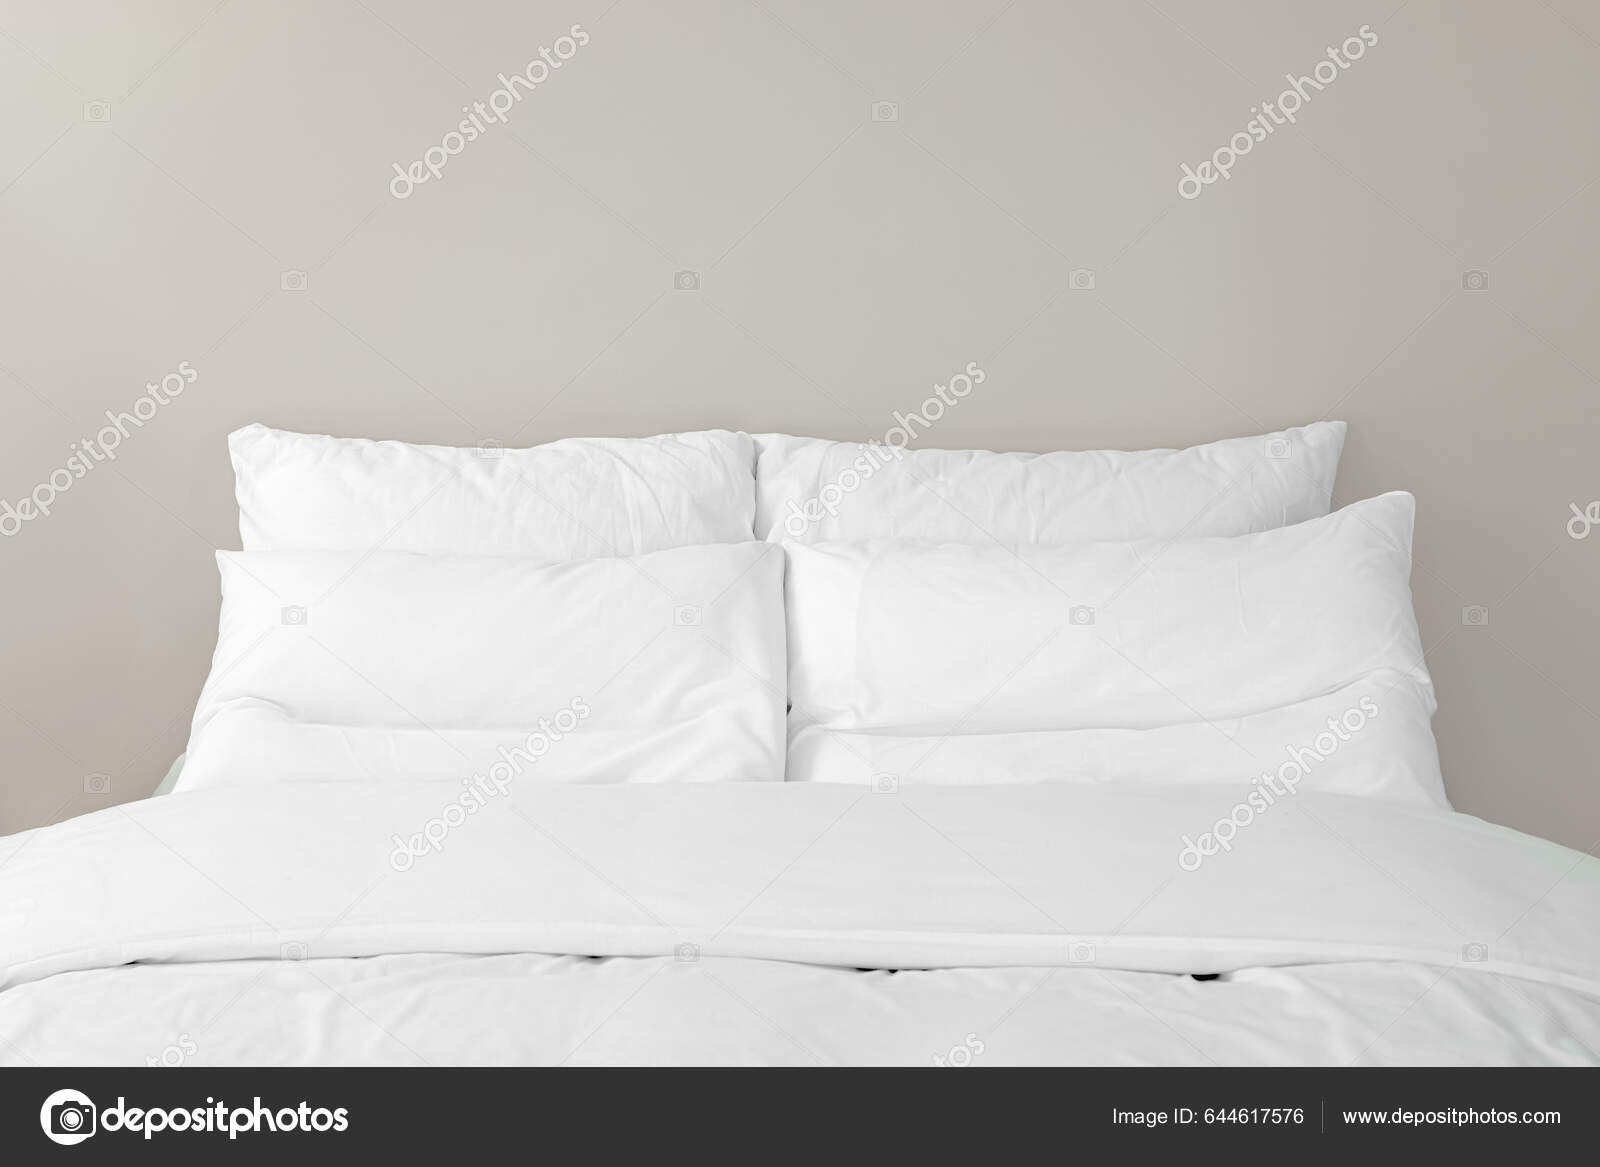 White Soft Pillows Cozy Bed Room — Stockfotografi © NewAfrica #644617576